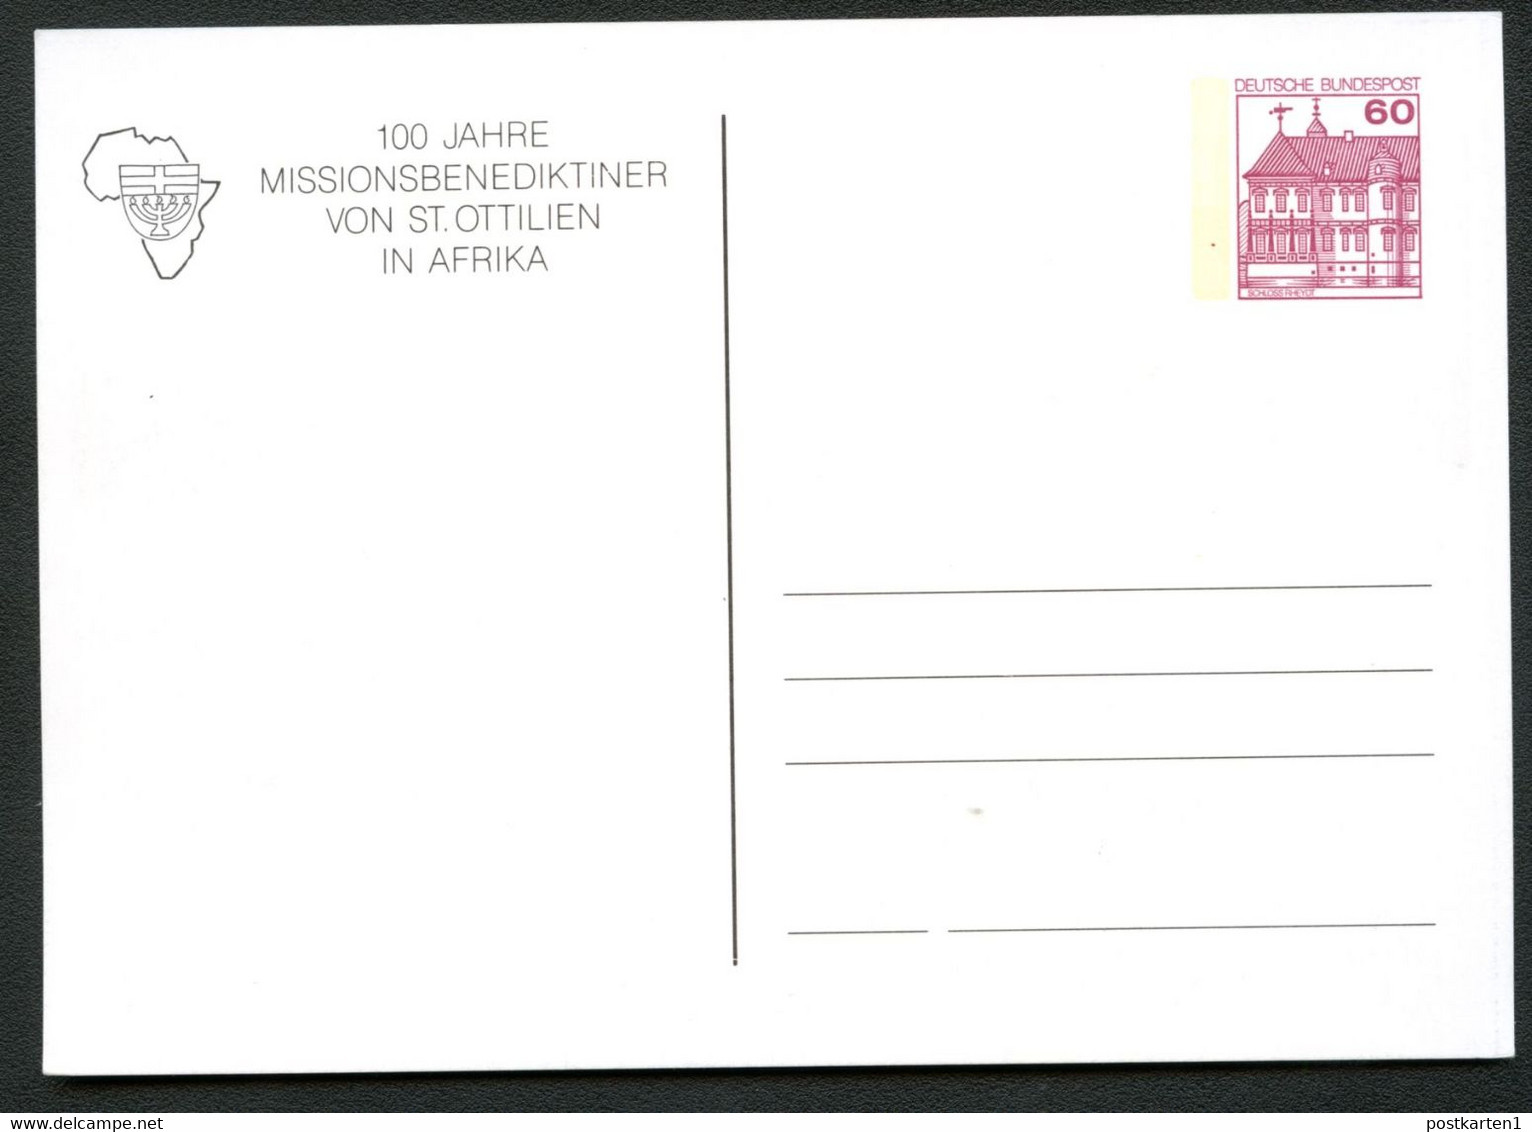 Bund PP106 B2/053 MISSIONSBENEDIKTINER AFRIKA DARESSALAM St. Ottilien 1987 - Privé Postkaarten - Ongebruikt